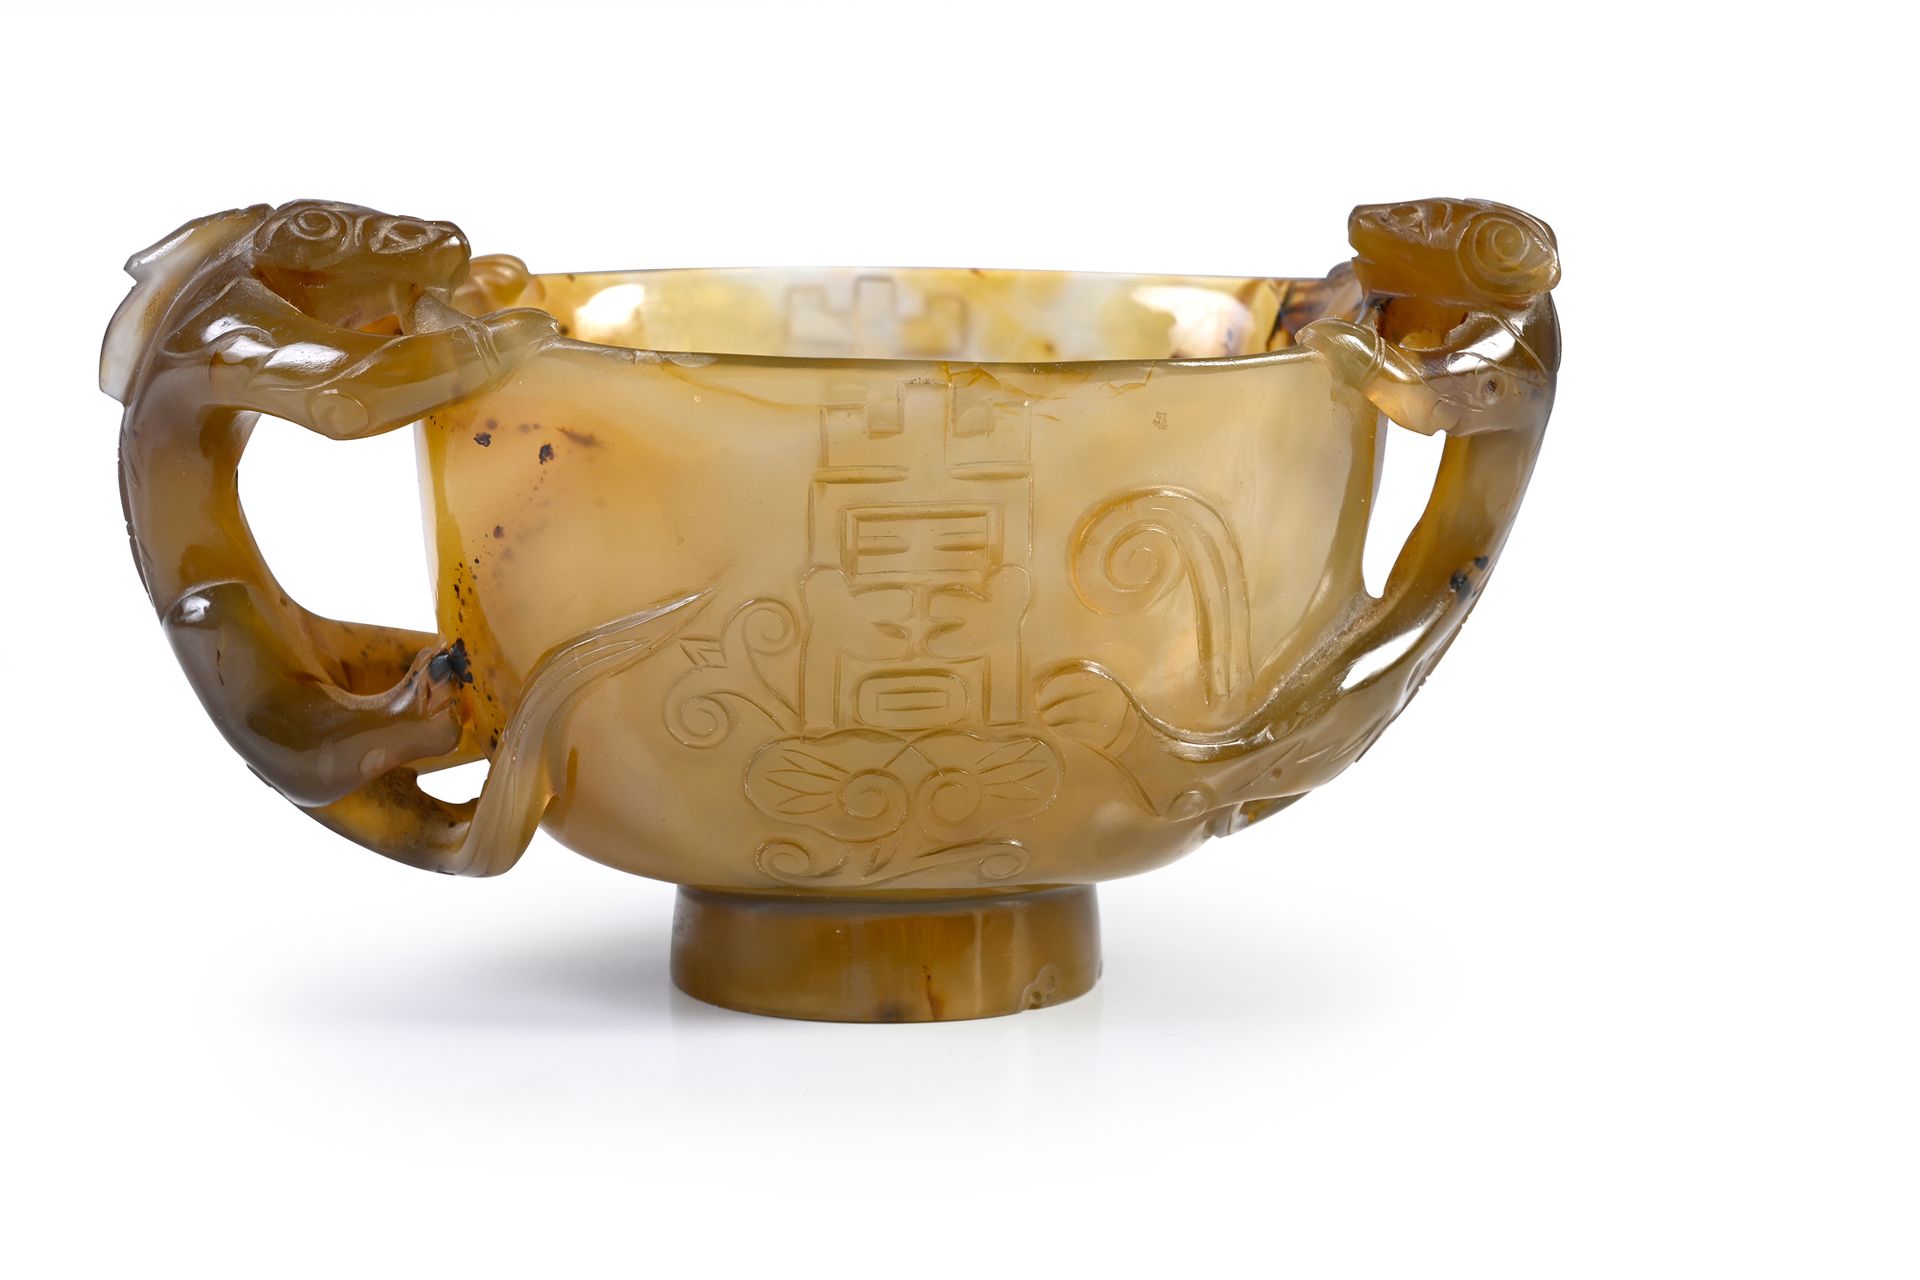 CHINE, XVIIIe siècle 罕见的玛瑙雕花碗，把手呈龙形或造型龙形，沿着两侧爬到颈部。
高：9厘米
宽度：15厘米